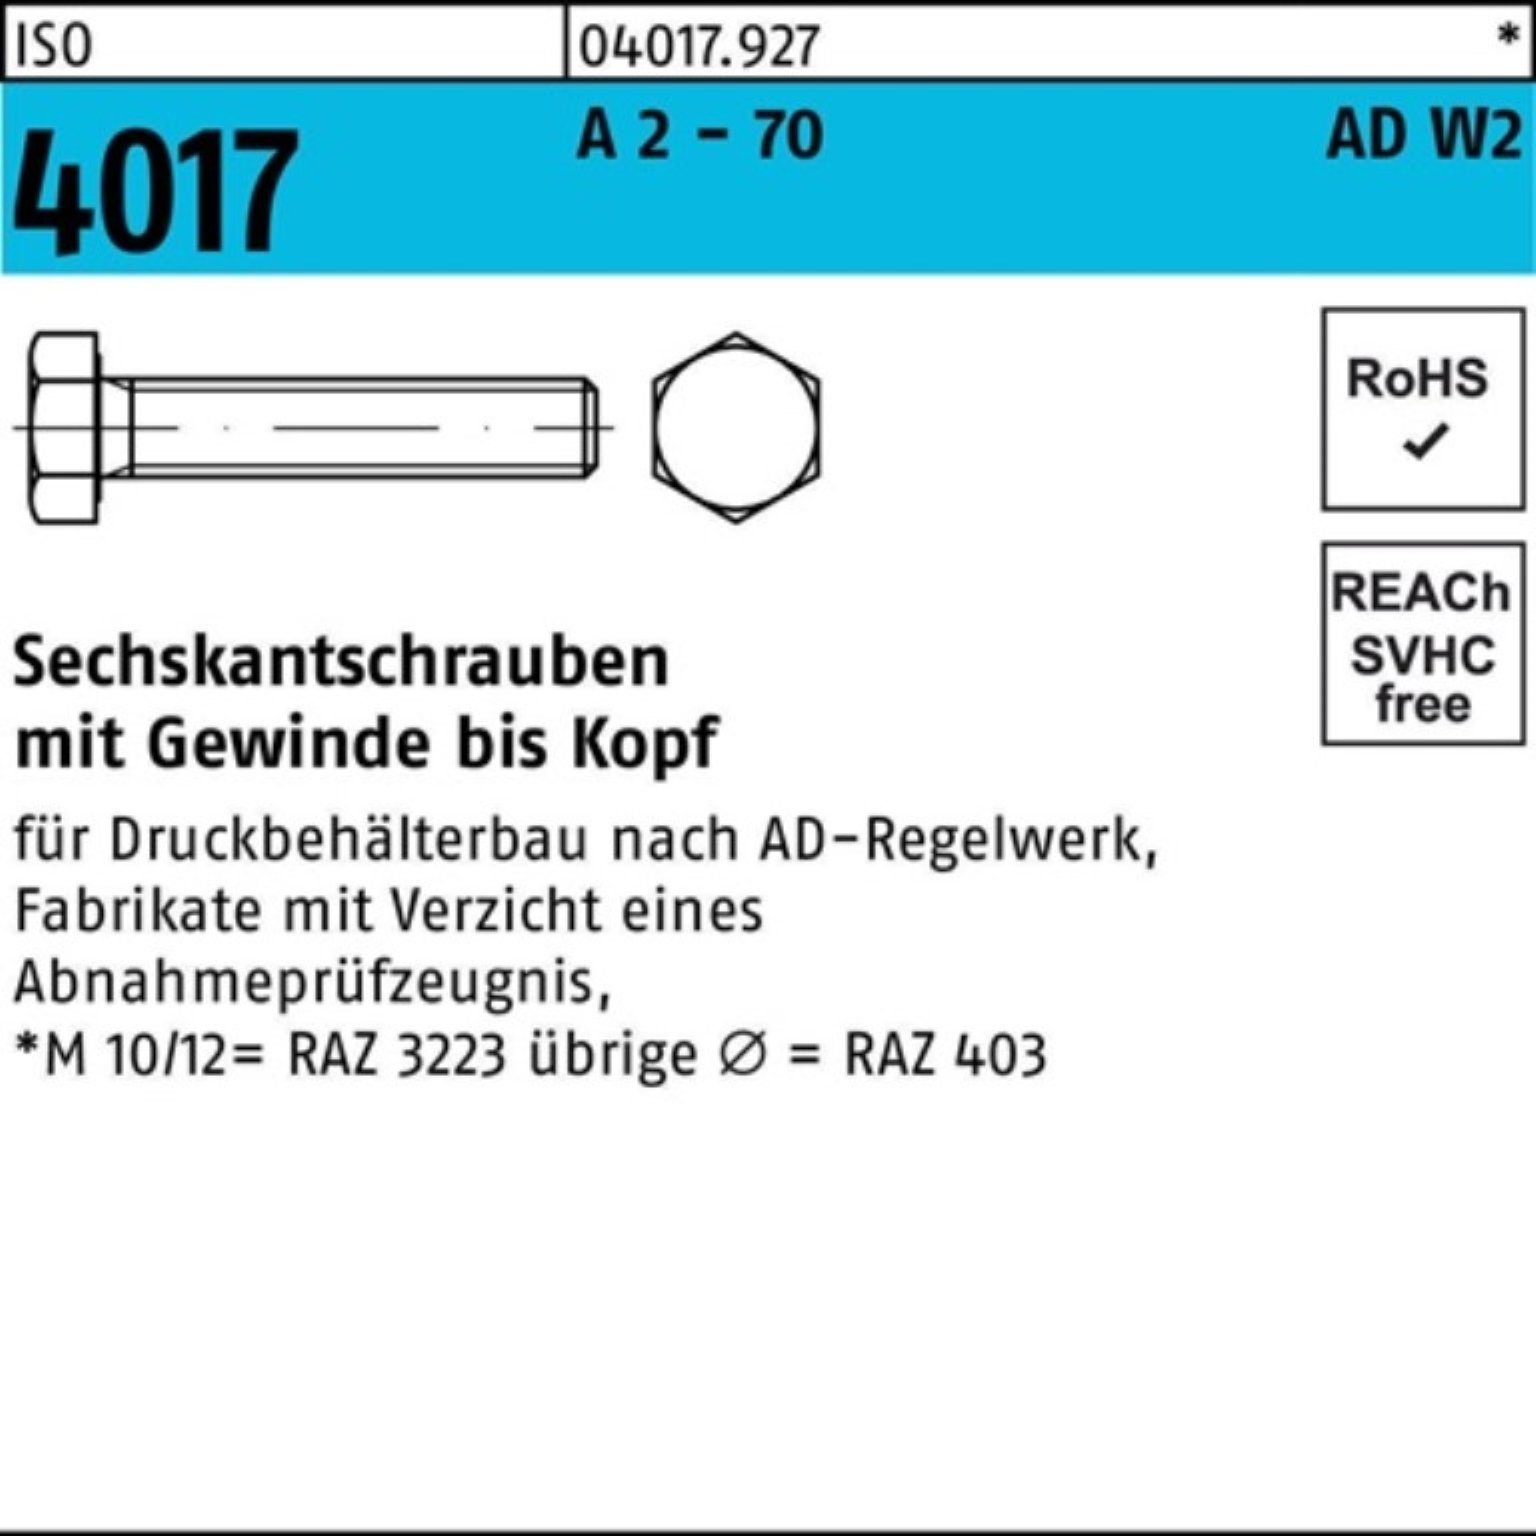 Bufab A St 25 4017 Sechskantschraube 100er Pack 50 VG - 70 Sechskantschraube 2 AD-W2 ISO M16x